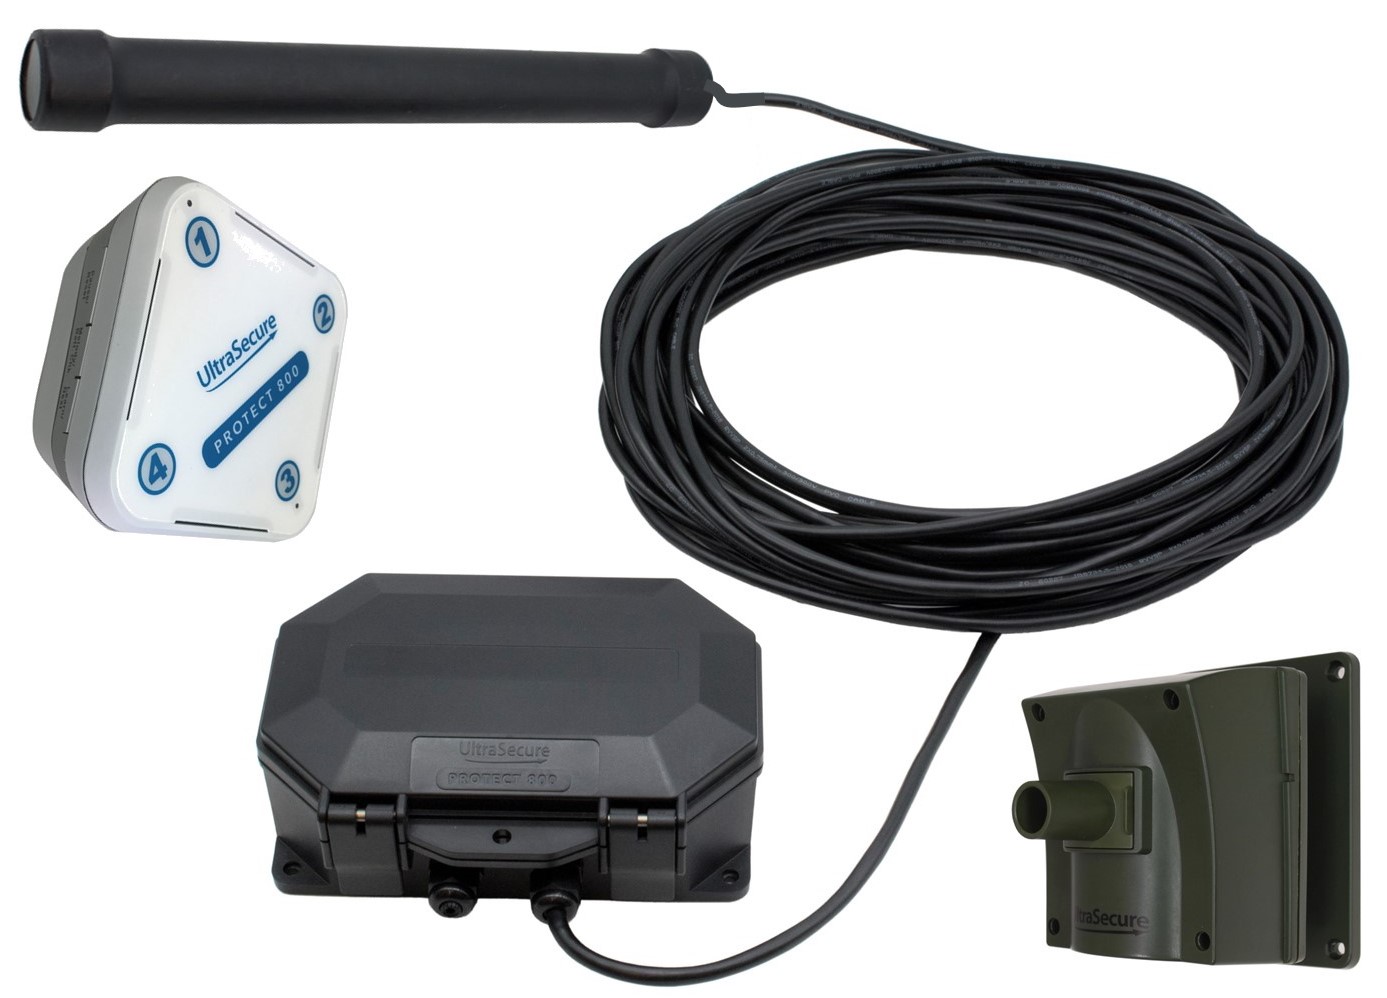 Protect-800 Driveway Alarm Kit